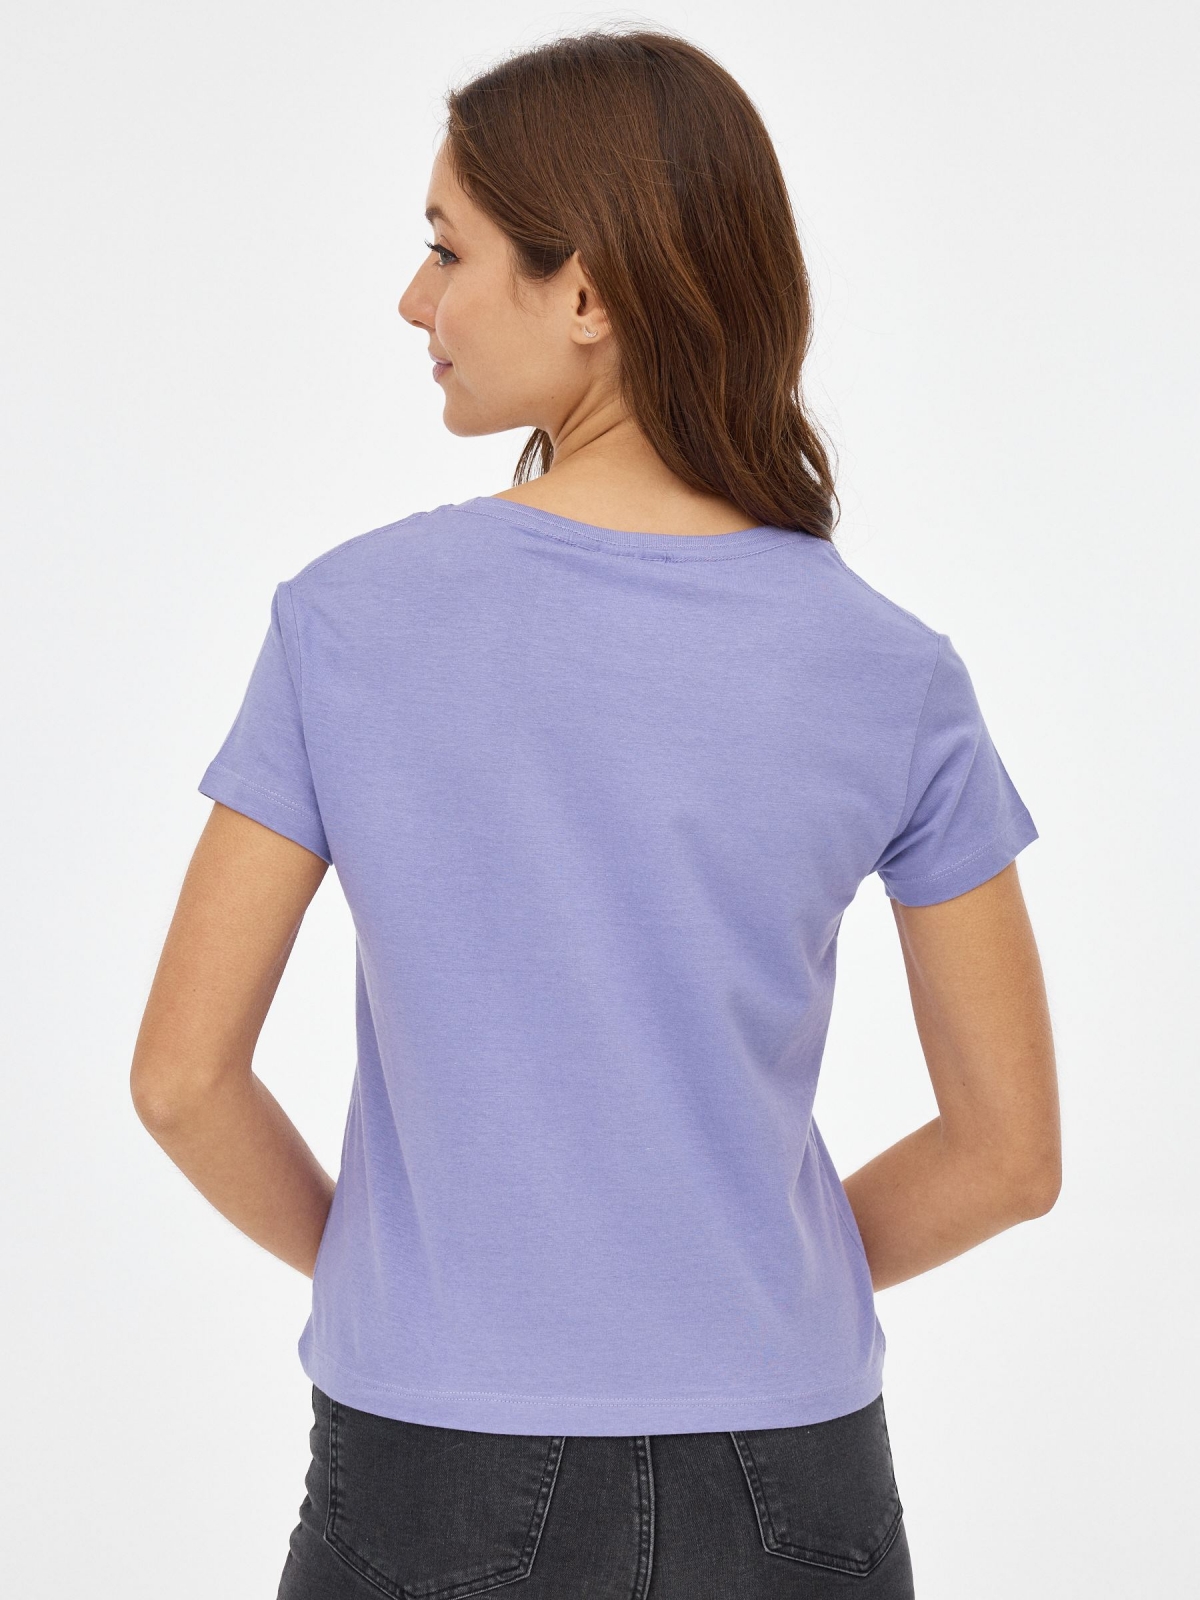 Camiseta Stitch lila vista media trasera